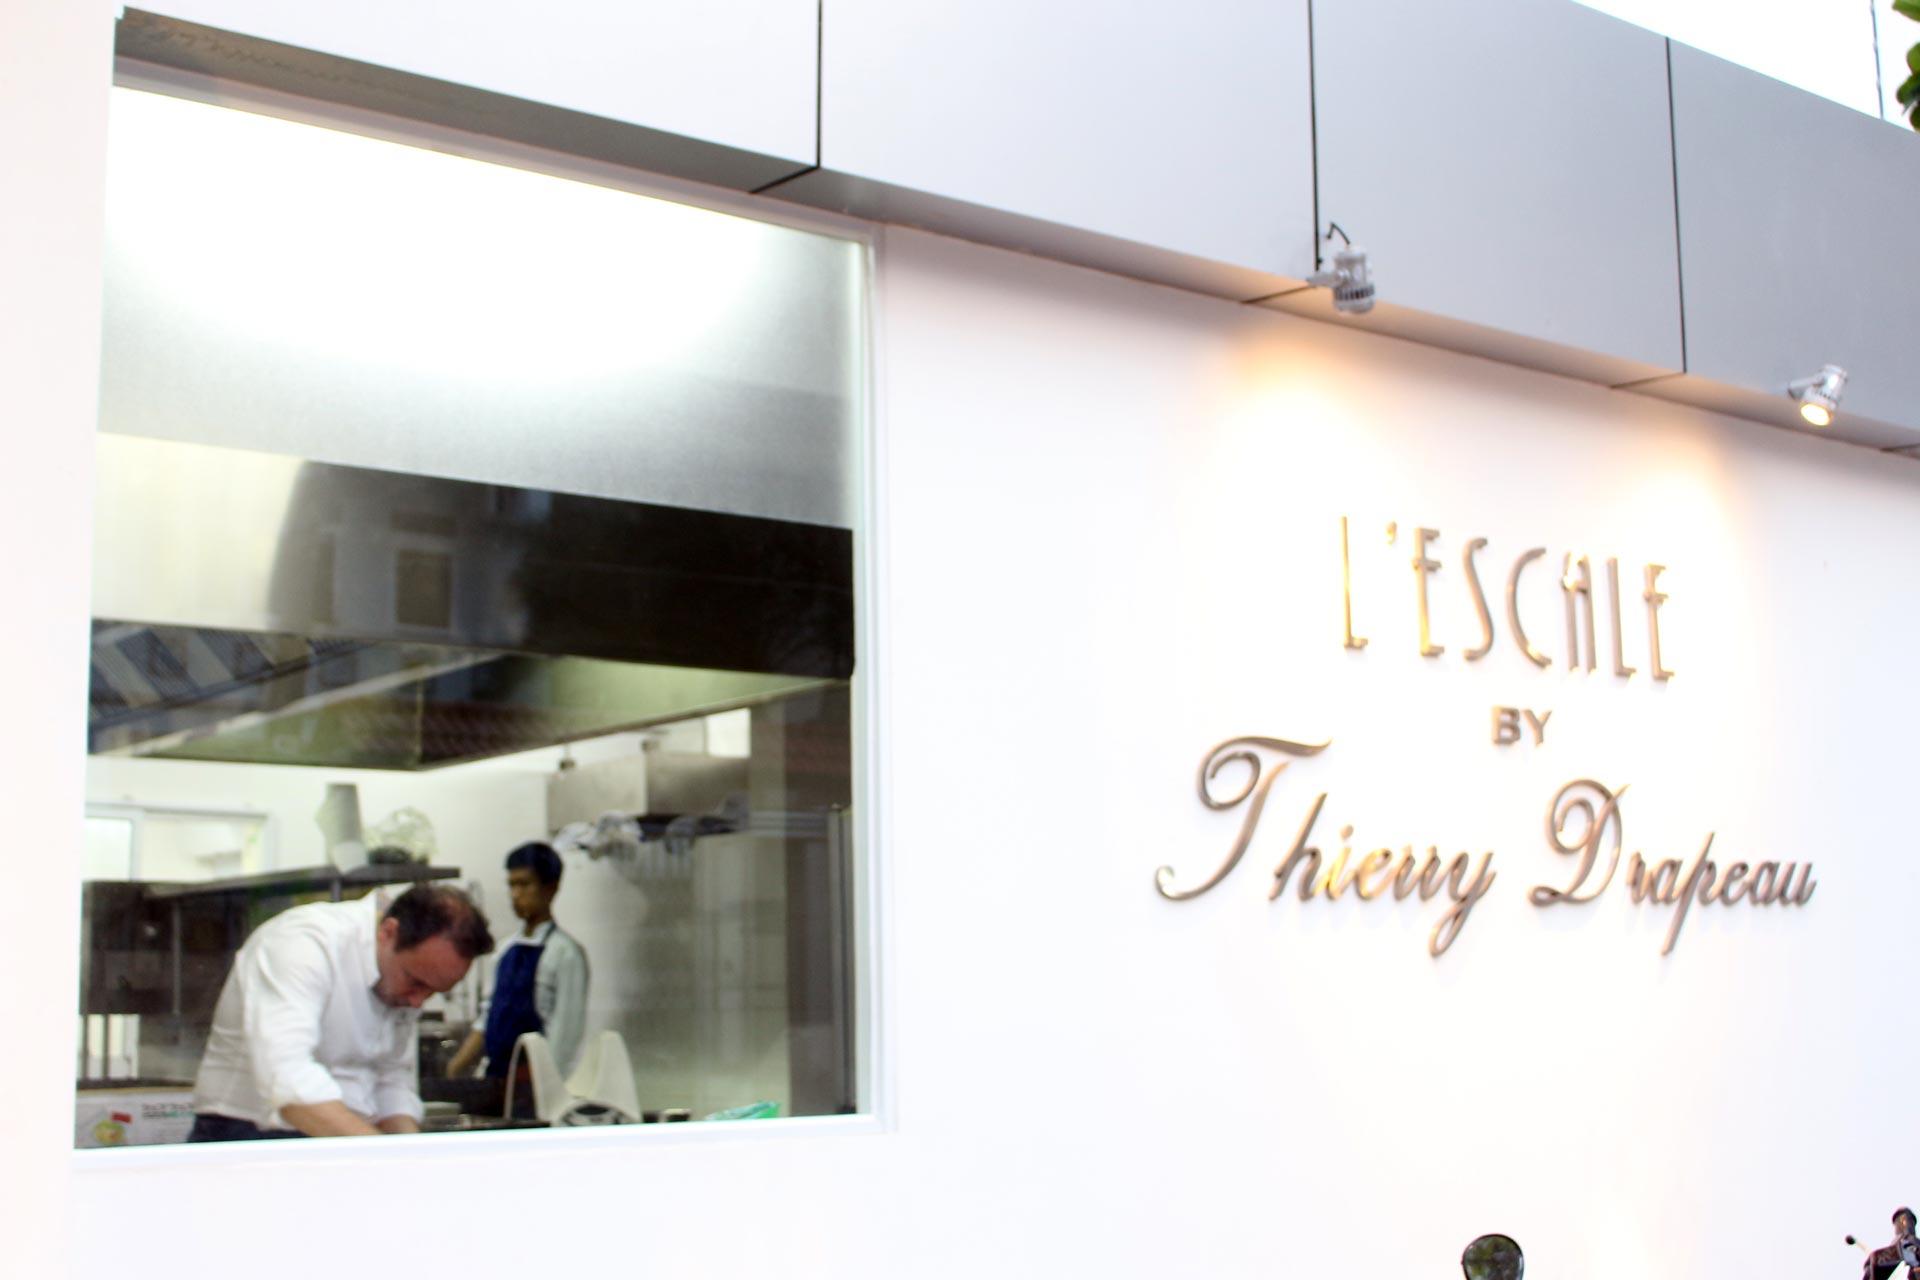 Mặt tiền của nhà hàng L'Escale by Thierry Drapeau (Ảnh: Internet).